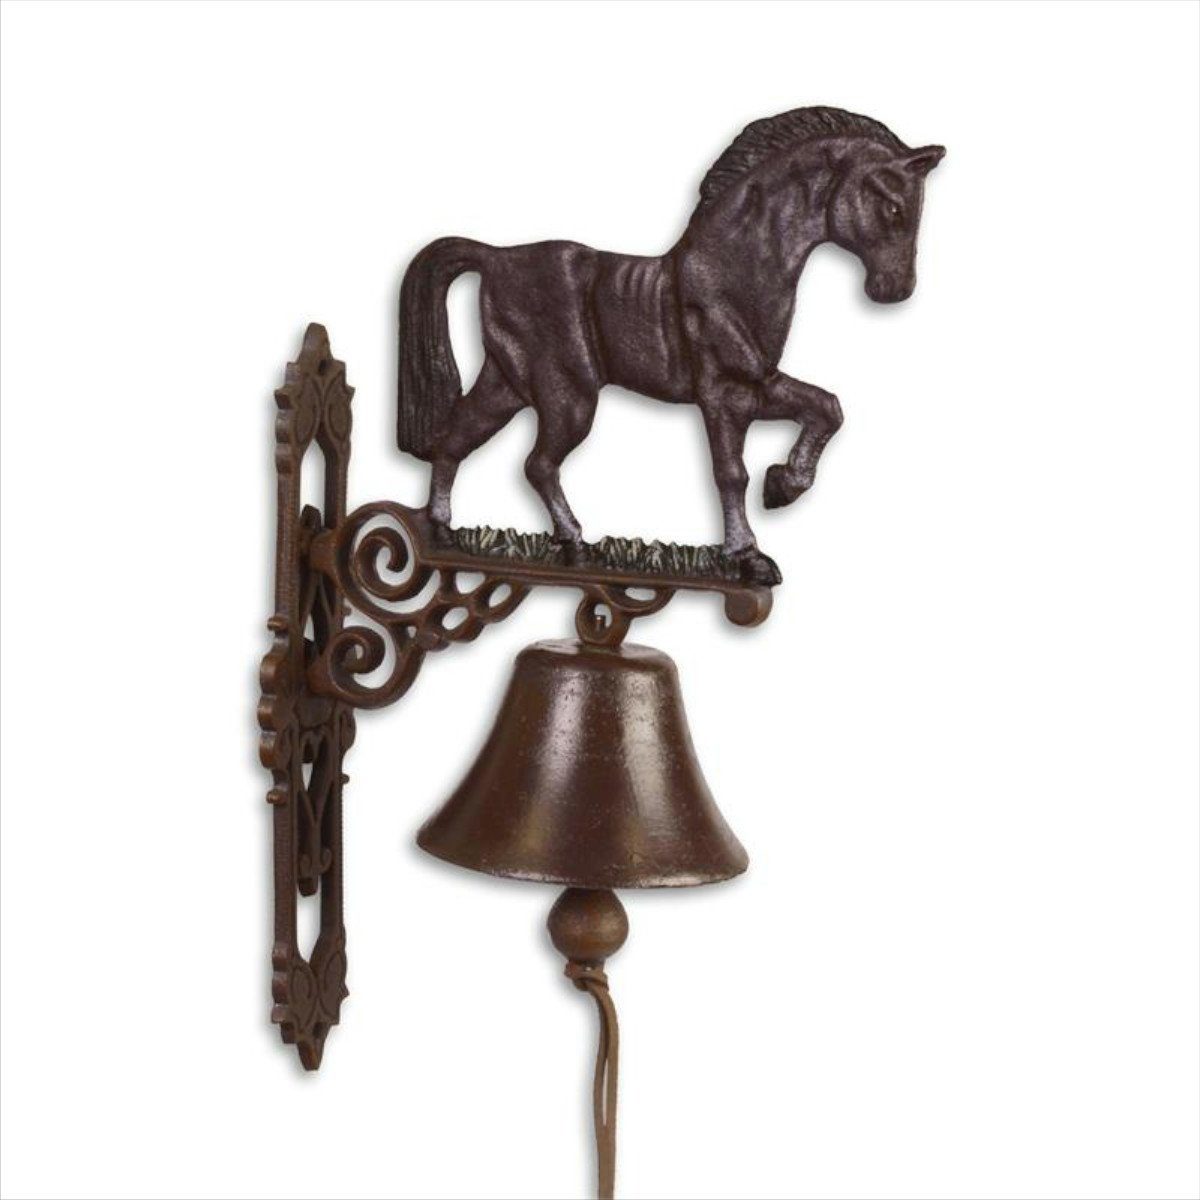 Moritz Gartenfigur Glocke Pferd, (Wandglocke), Gusseisen Türglocke Wandglocke Glocke Klingel Gong Antik Landhaus